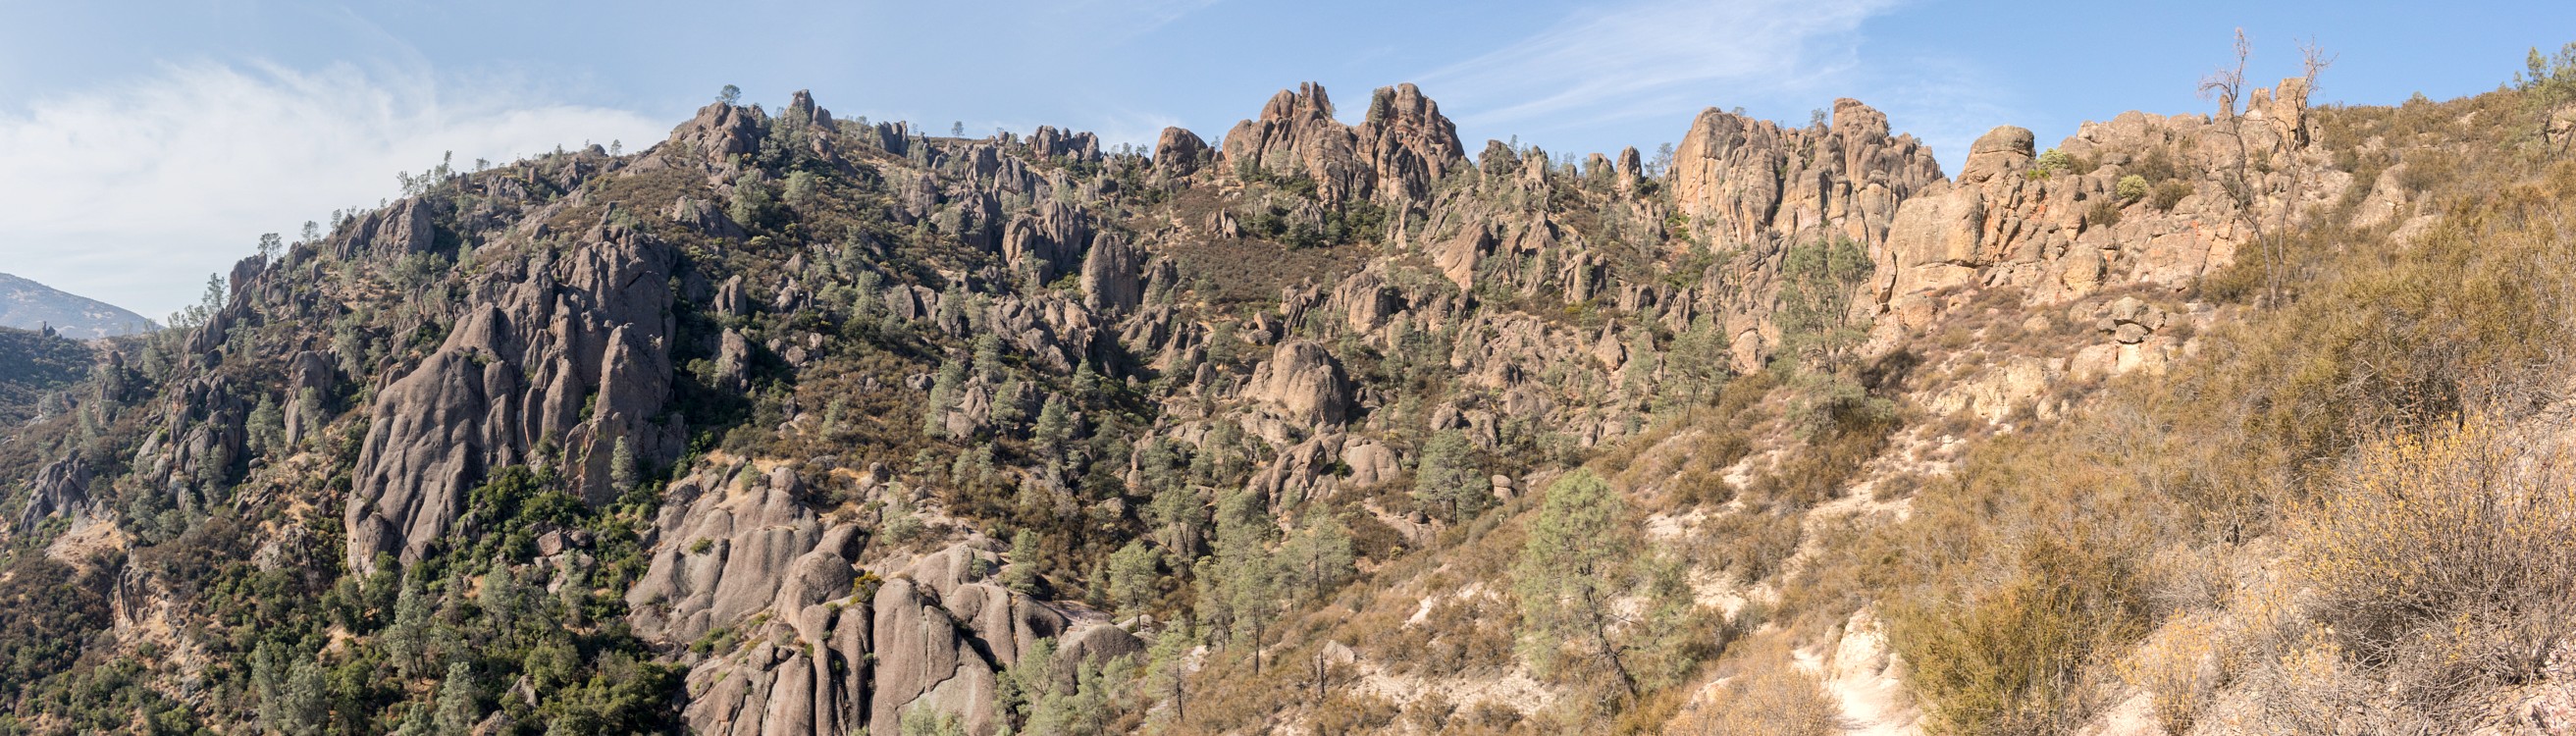 Pinnacles from High Peaks Trail